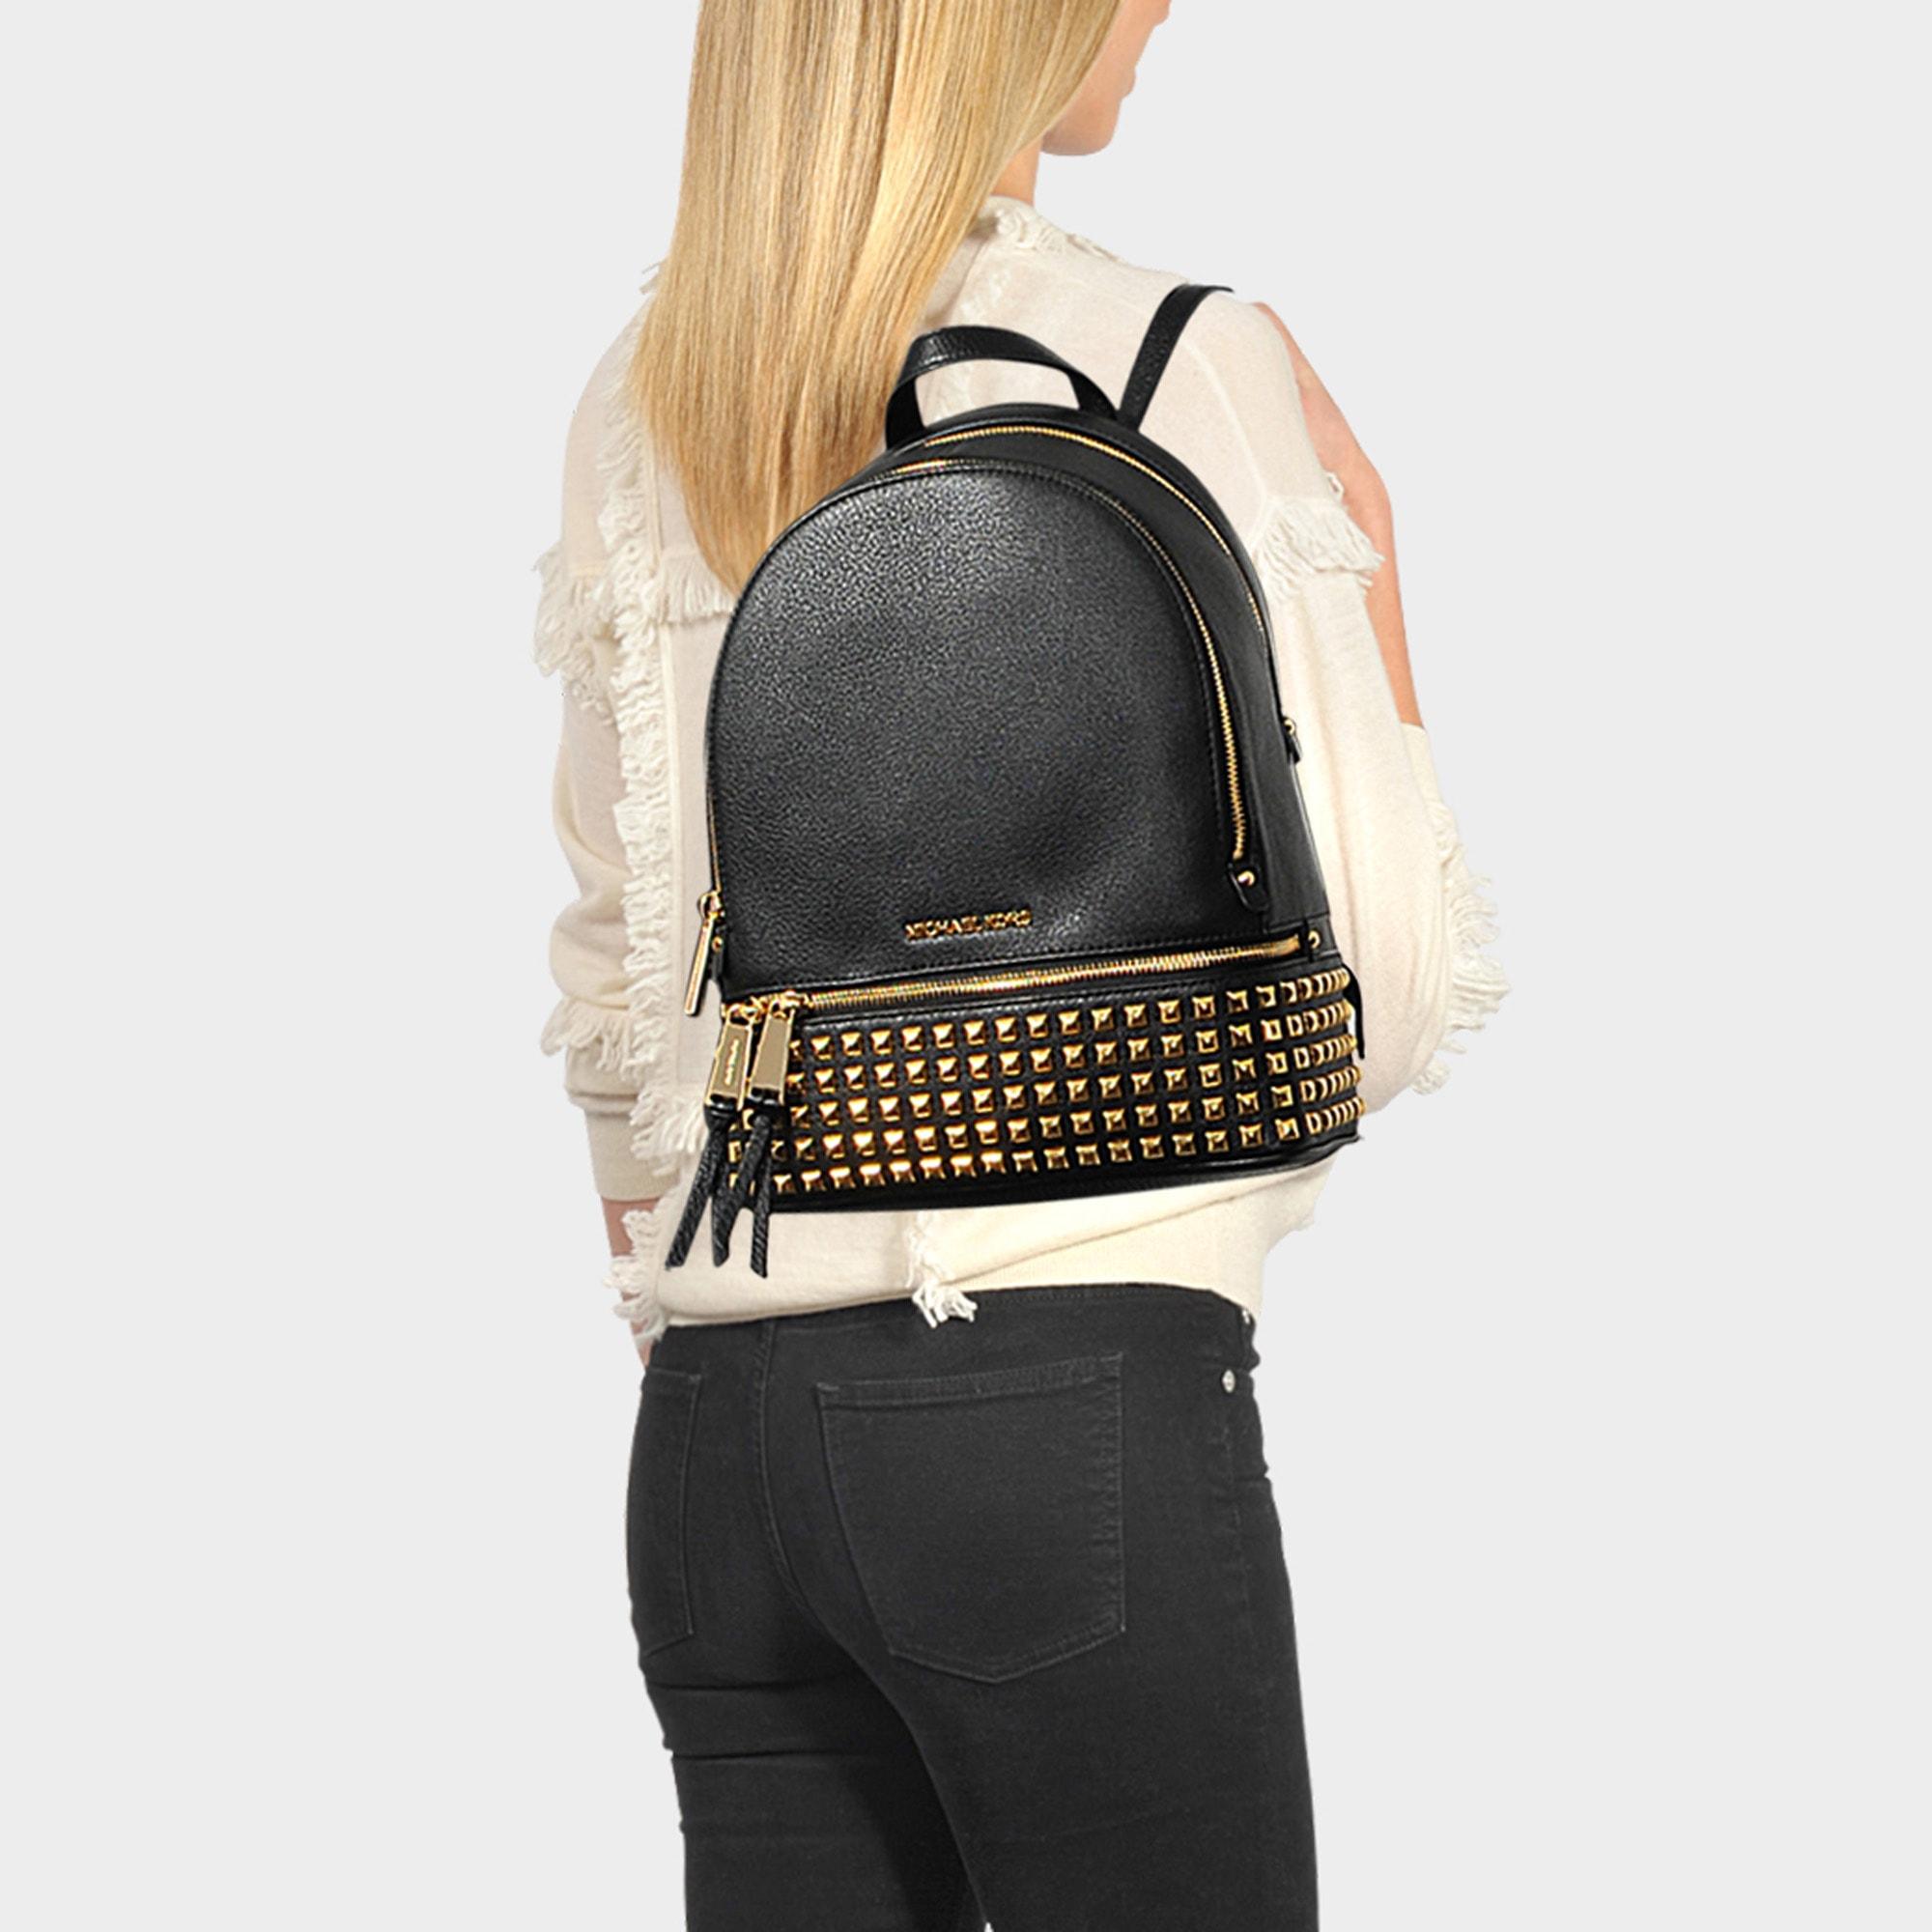 Michael Kors Rhea Zip Medium Backpack, Black/Gold 